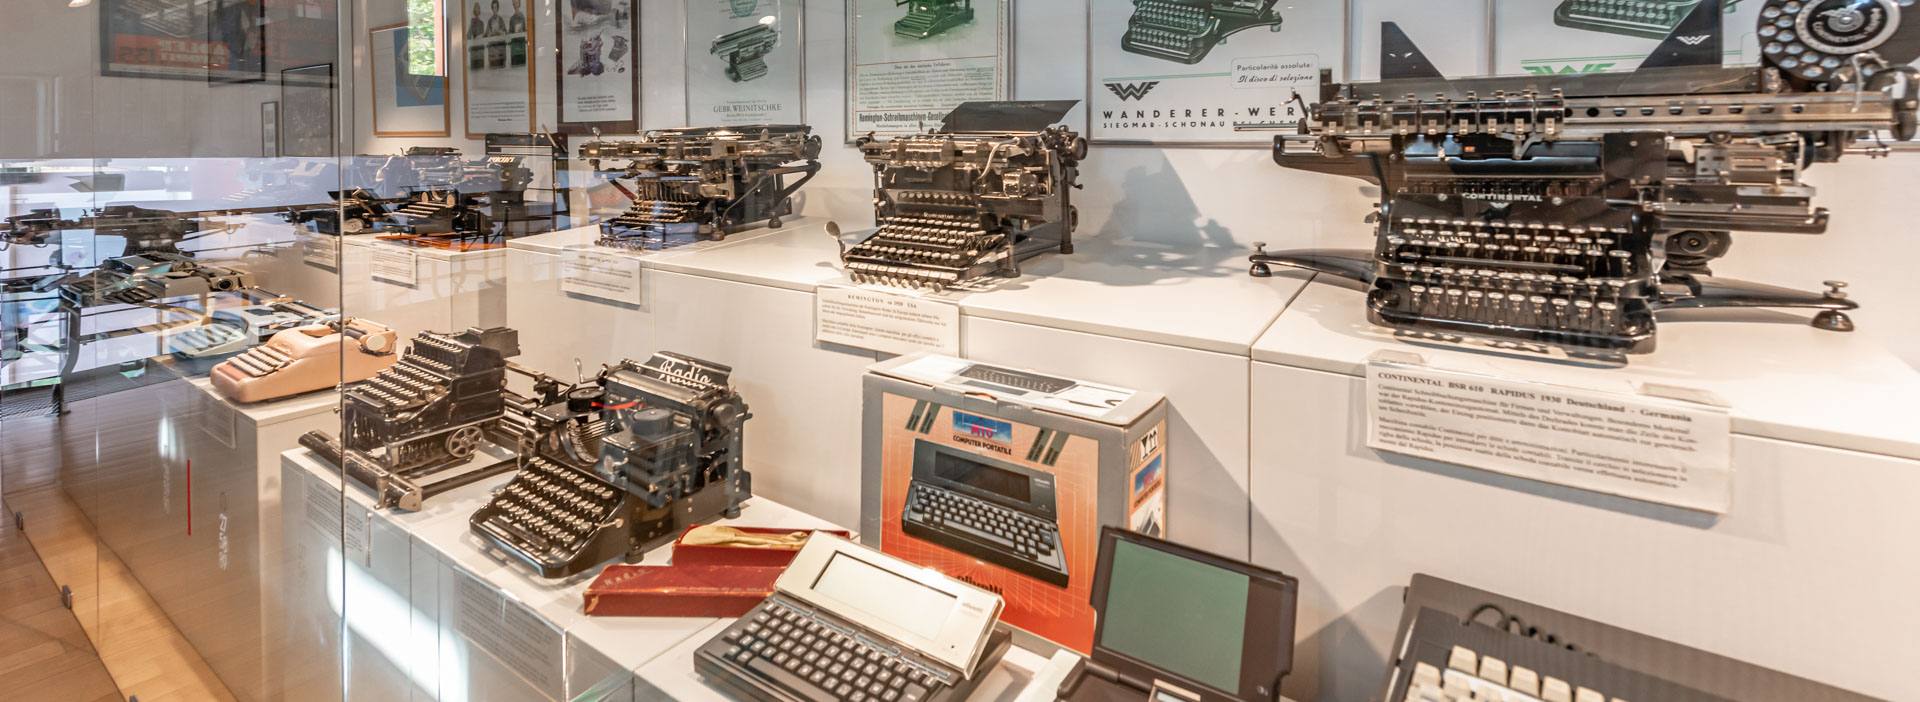 Schreibmaschinenmuseum Peter Mitterhofer